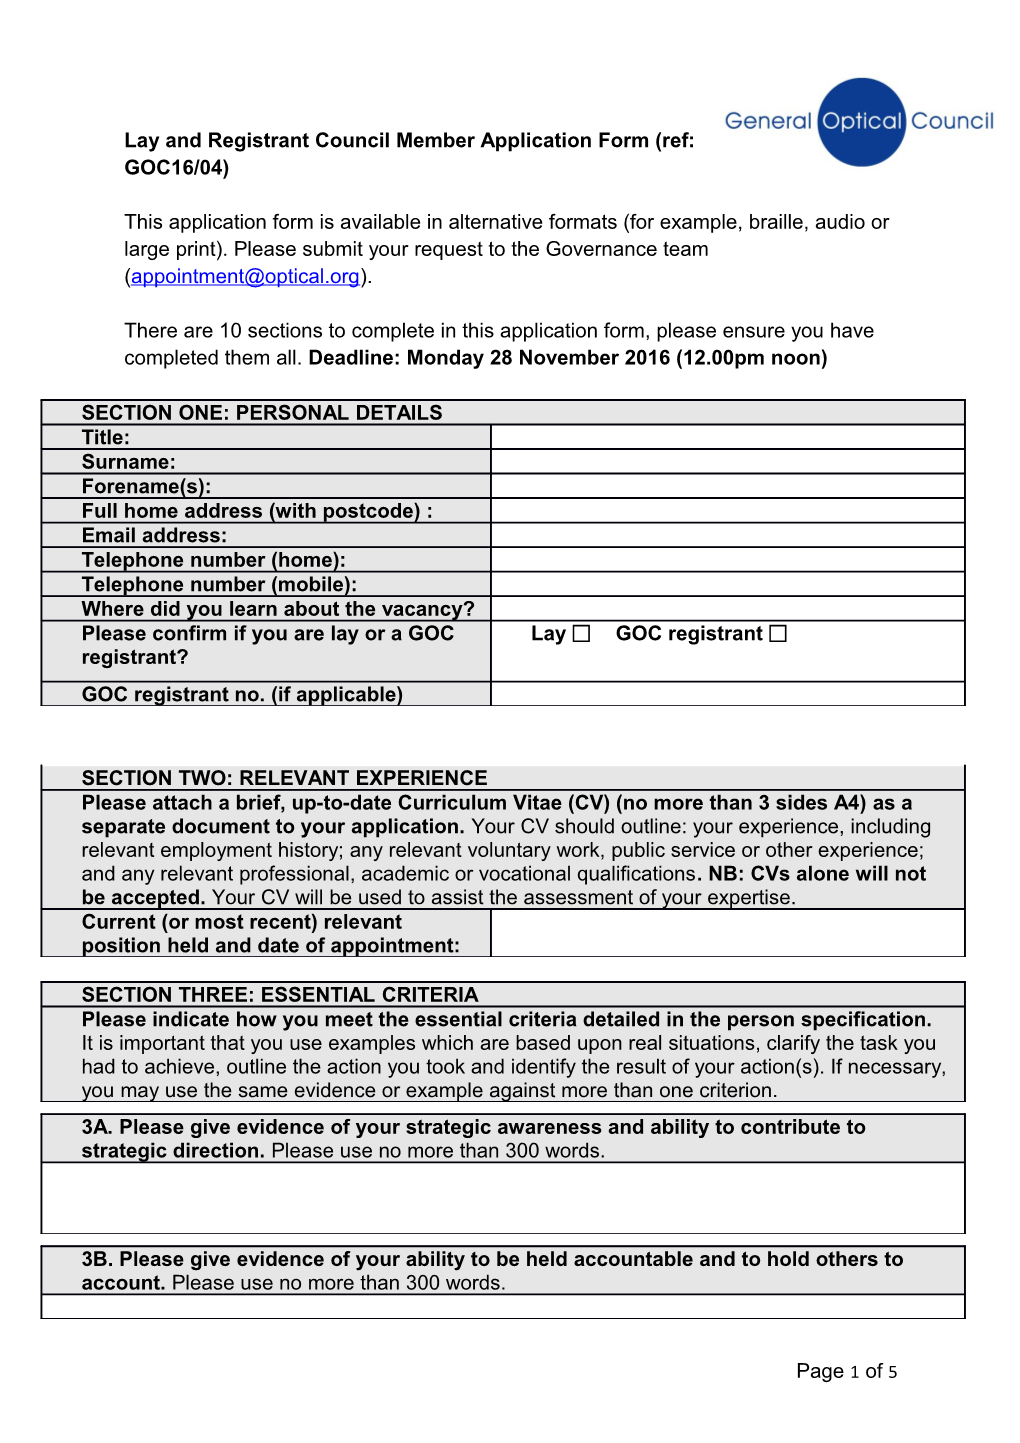 Lay and Registrant Council Member Application Form (Ref: GOC16/04)